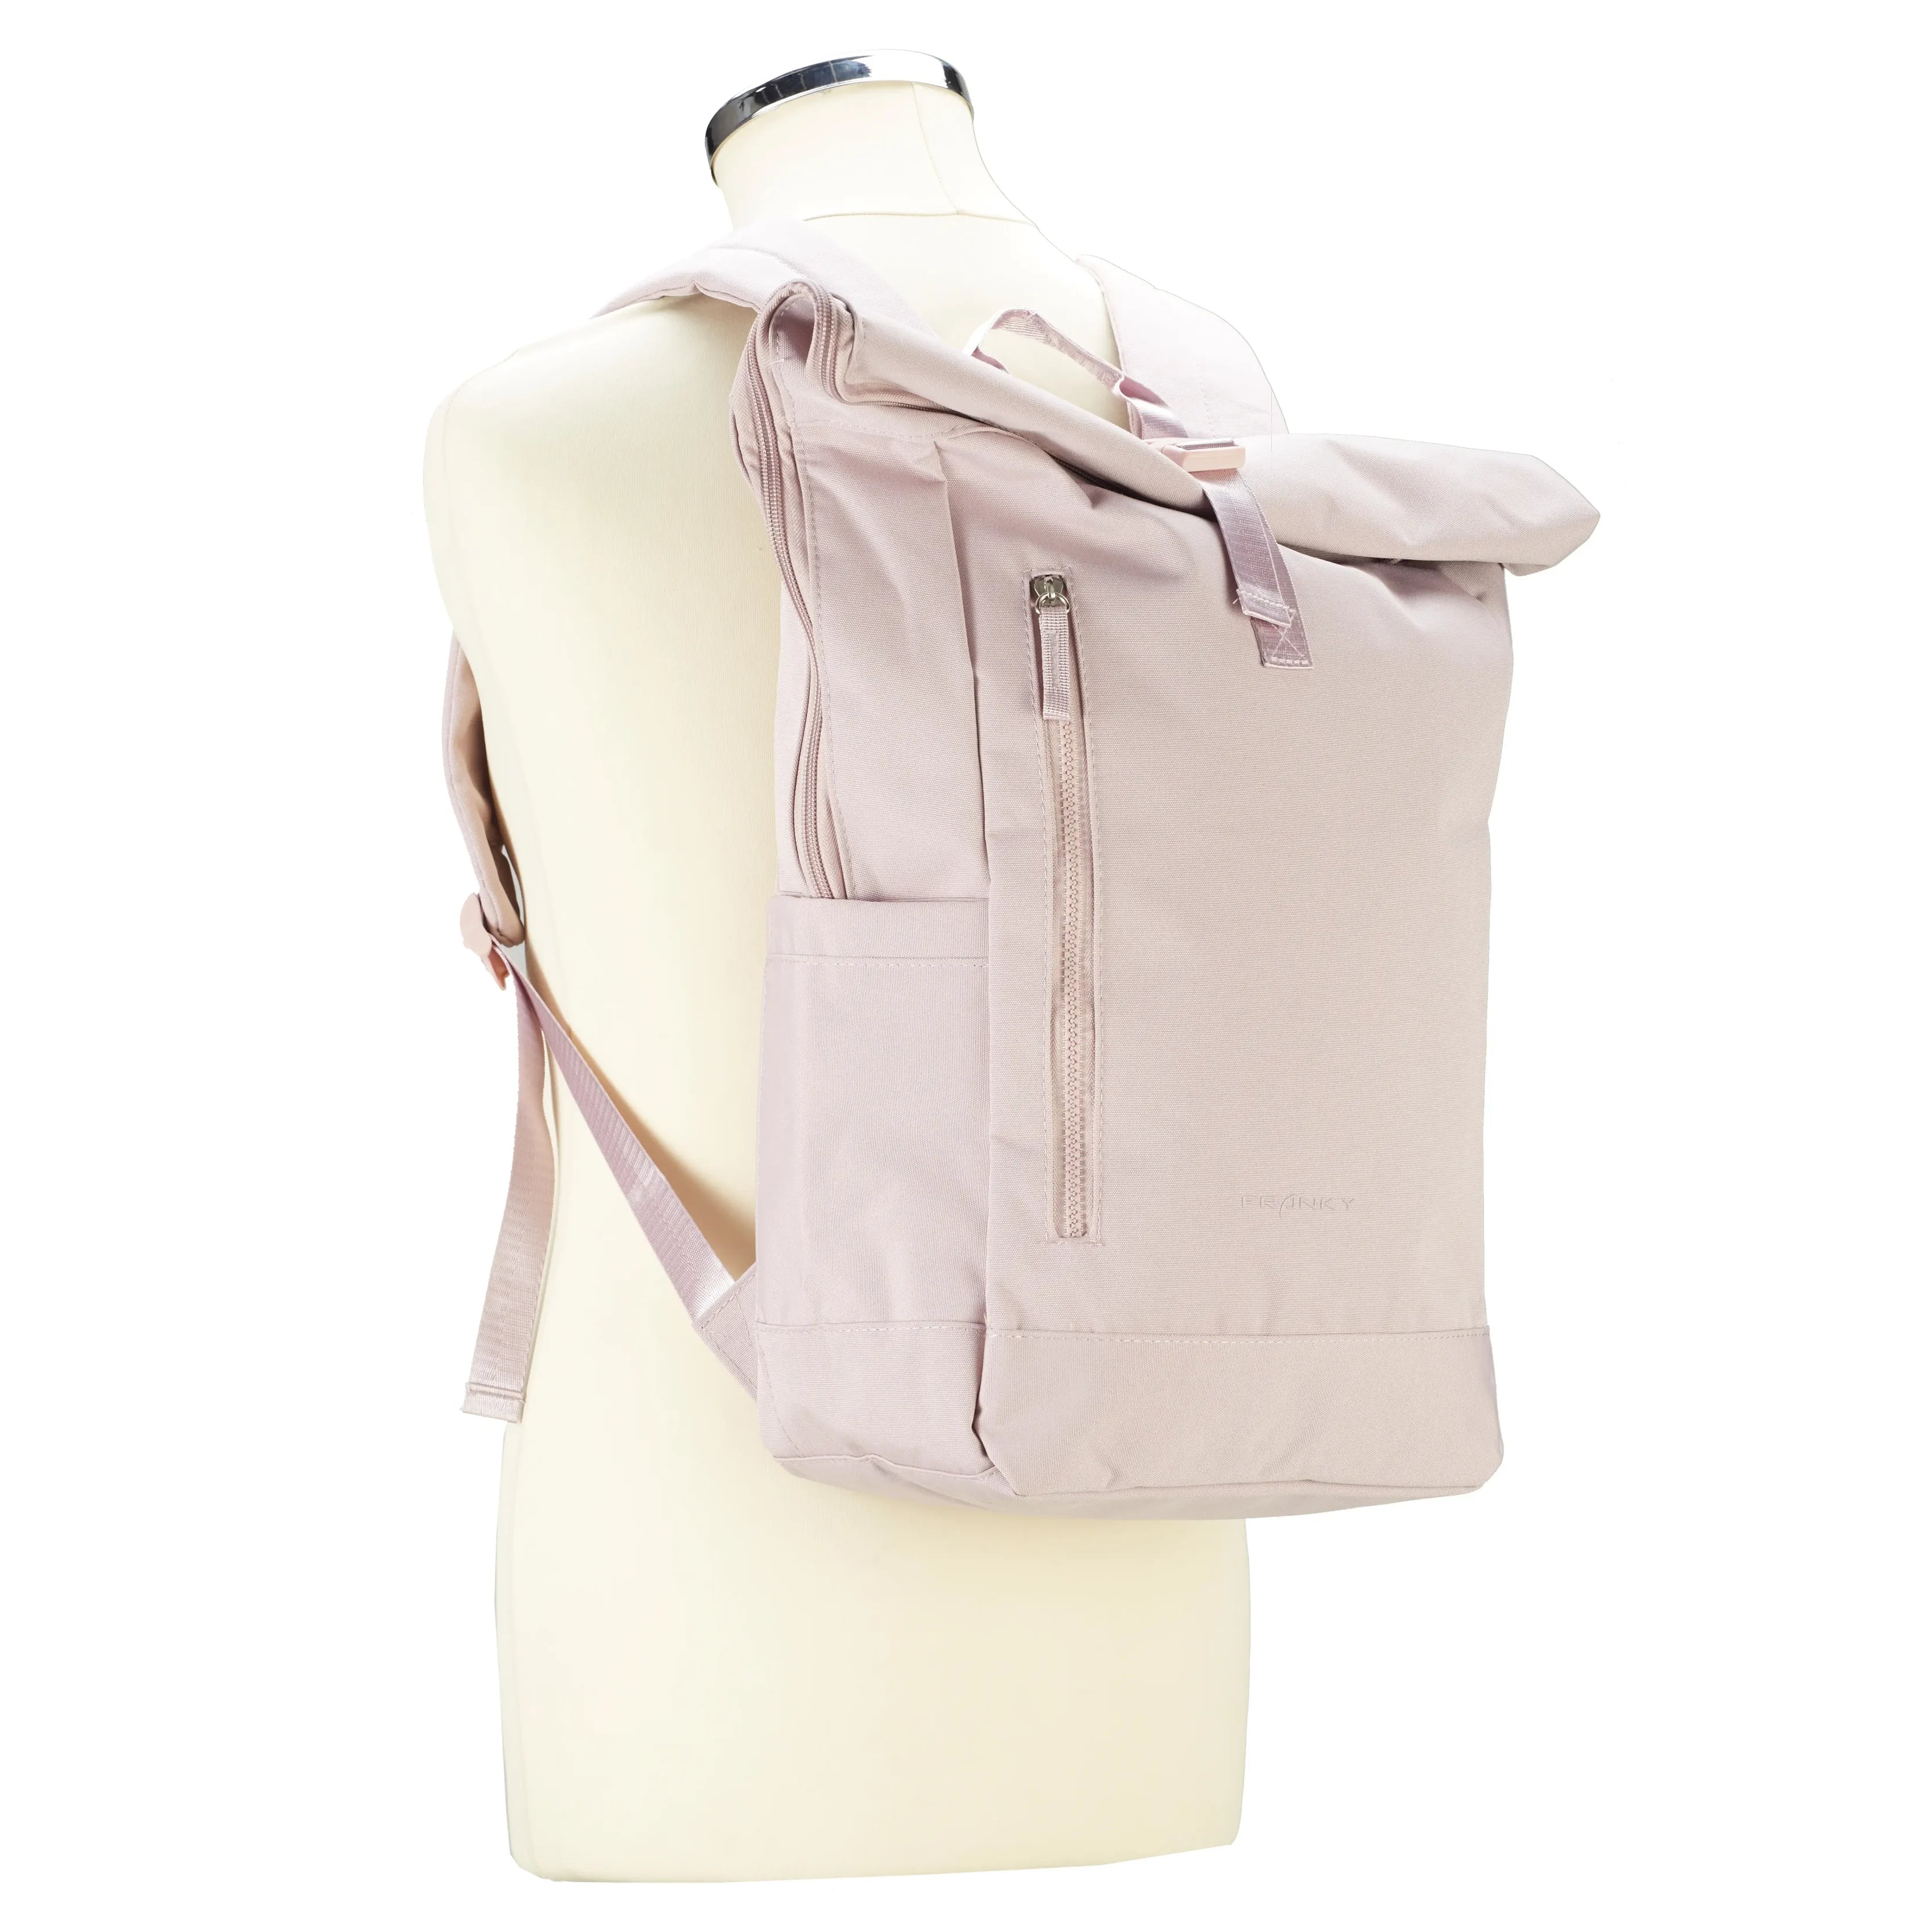 koffer-direkt.de Leisure backpack 40 cm - beige